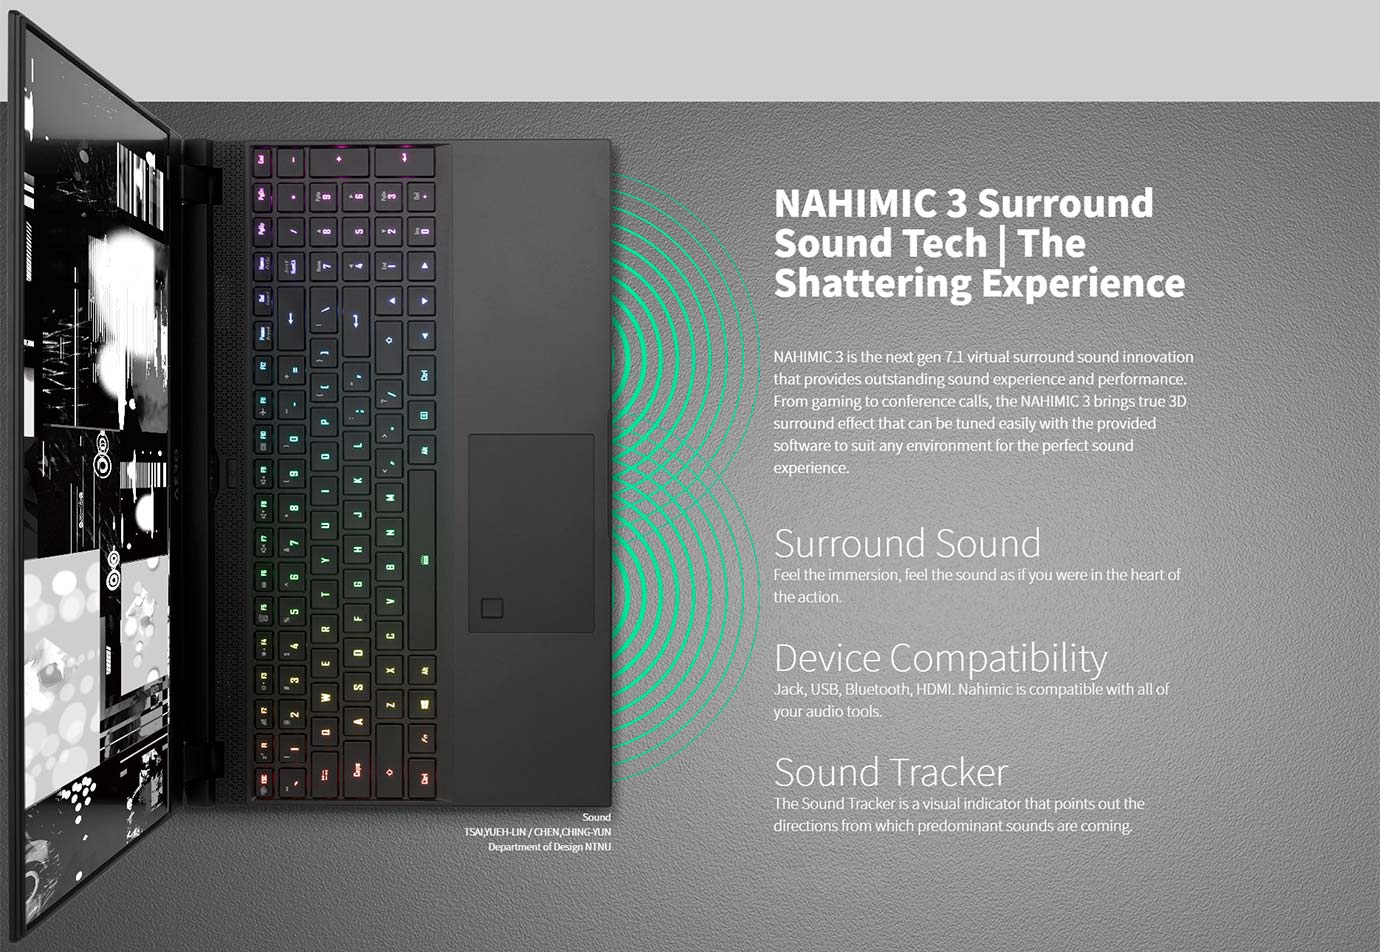 NAHIMIC 3 Surround Sound Tech